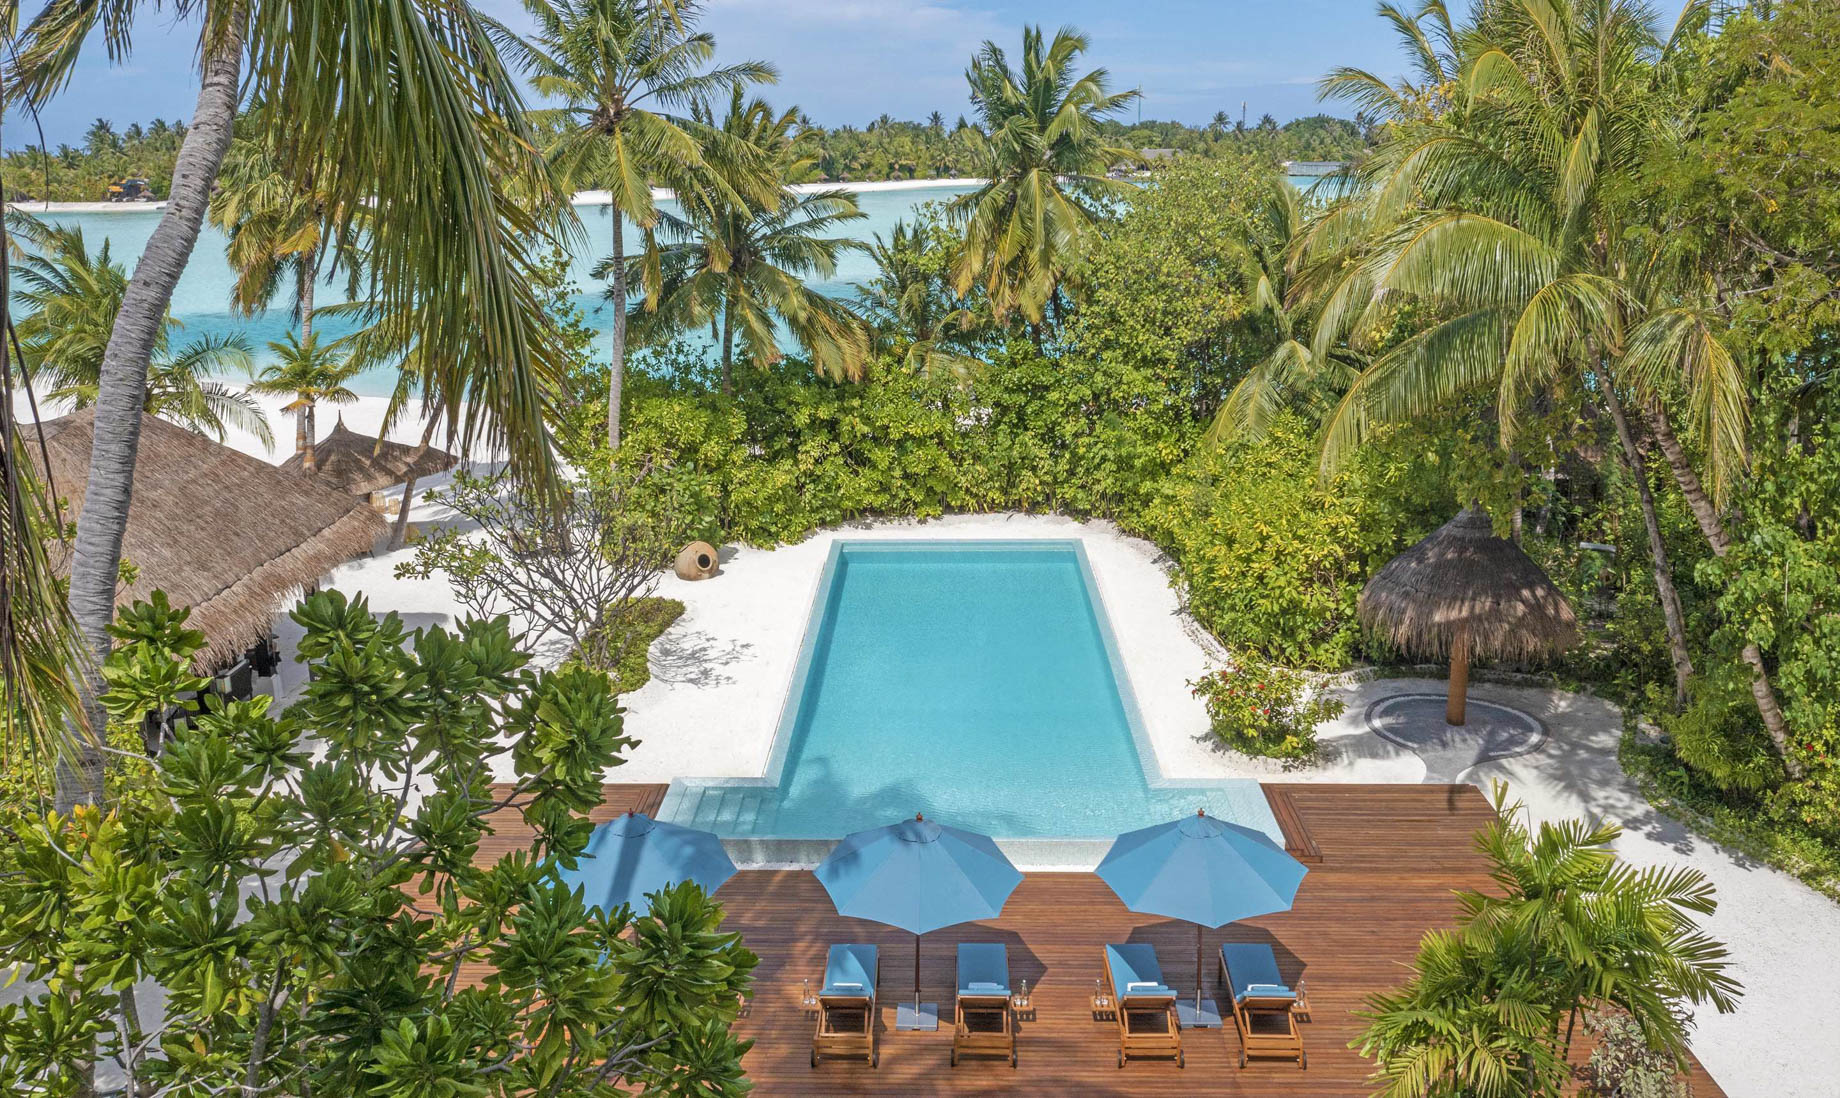 Naladhu Private Island Maldives Resort – South Male Atoll, Maldives – Resort Pool Aerial View